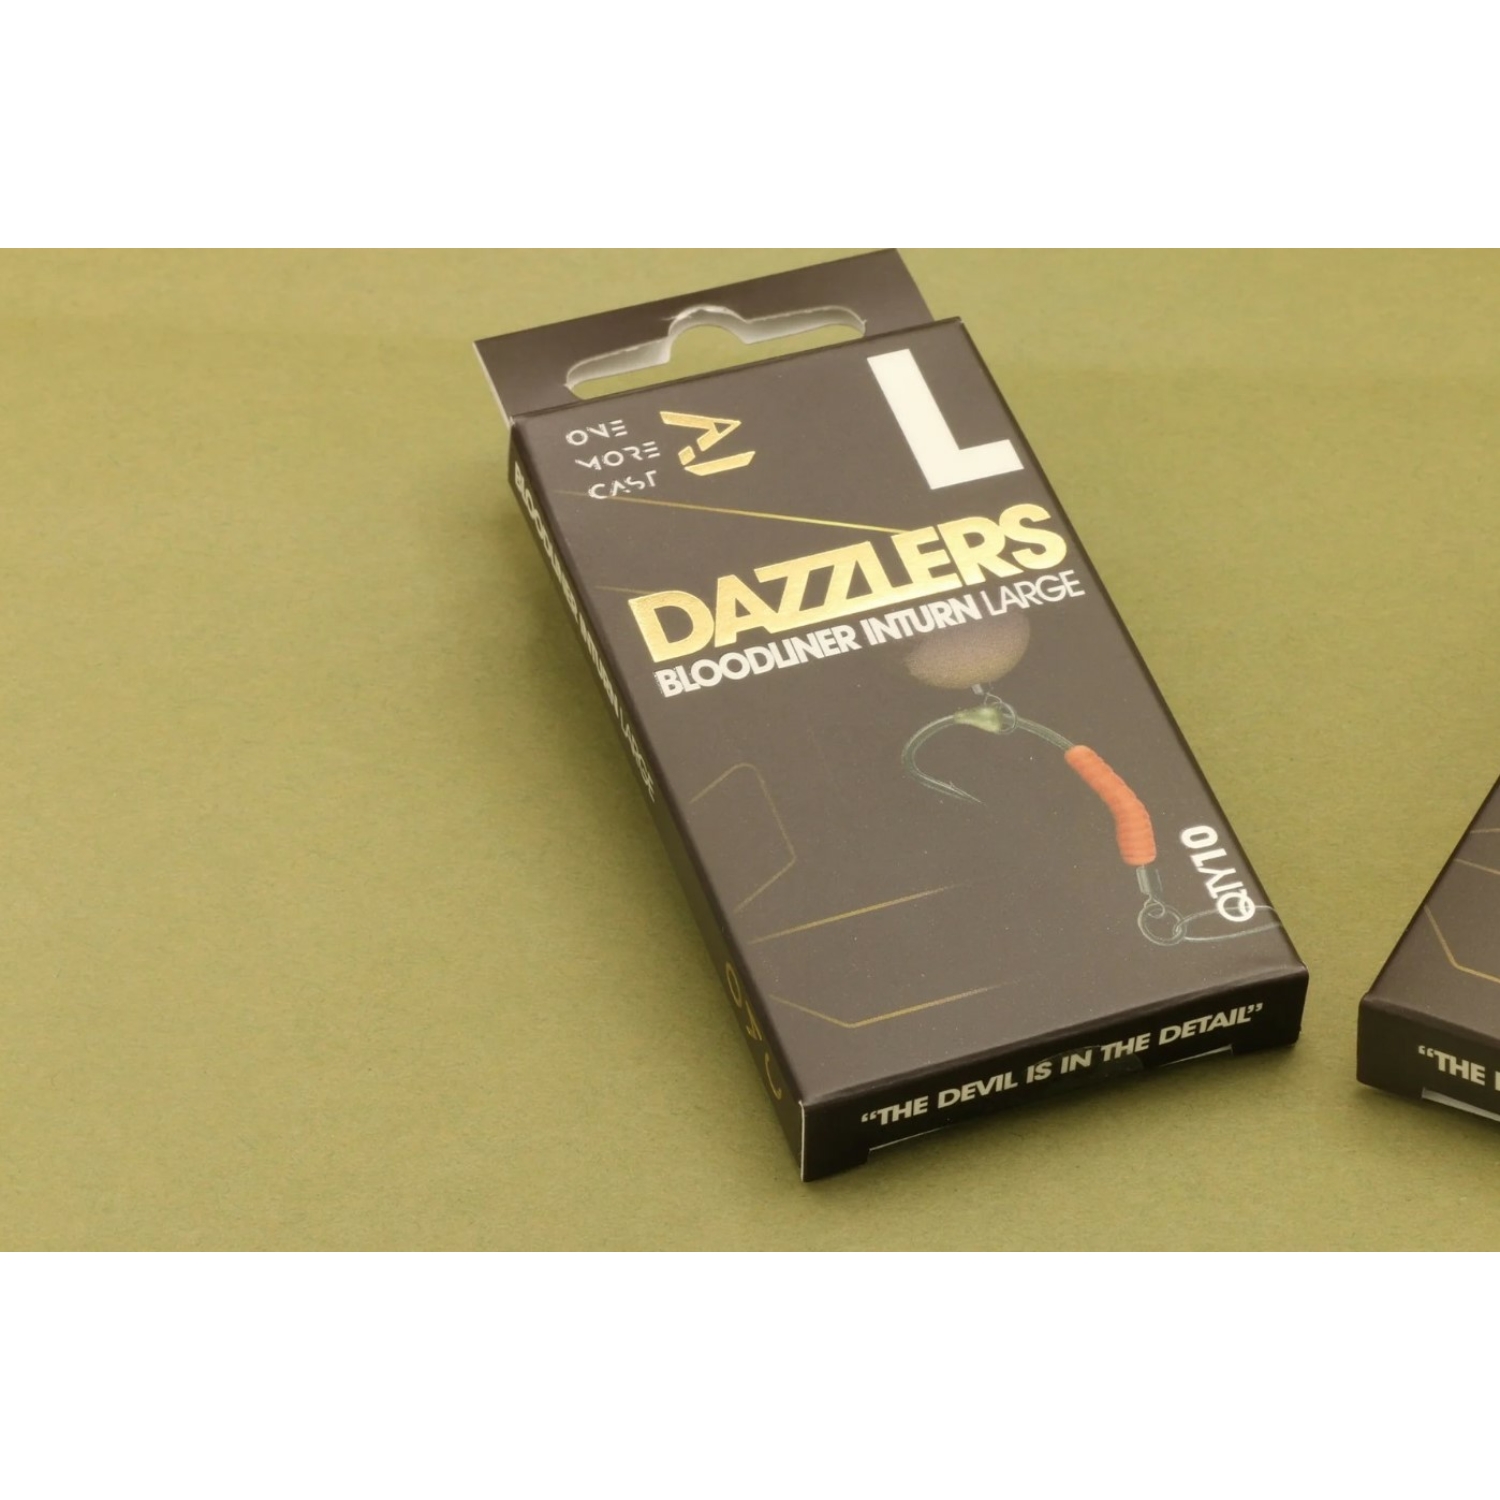 DAZZLERS Bloodliner - Inturn Large